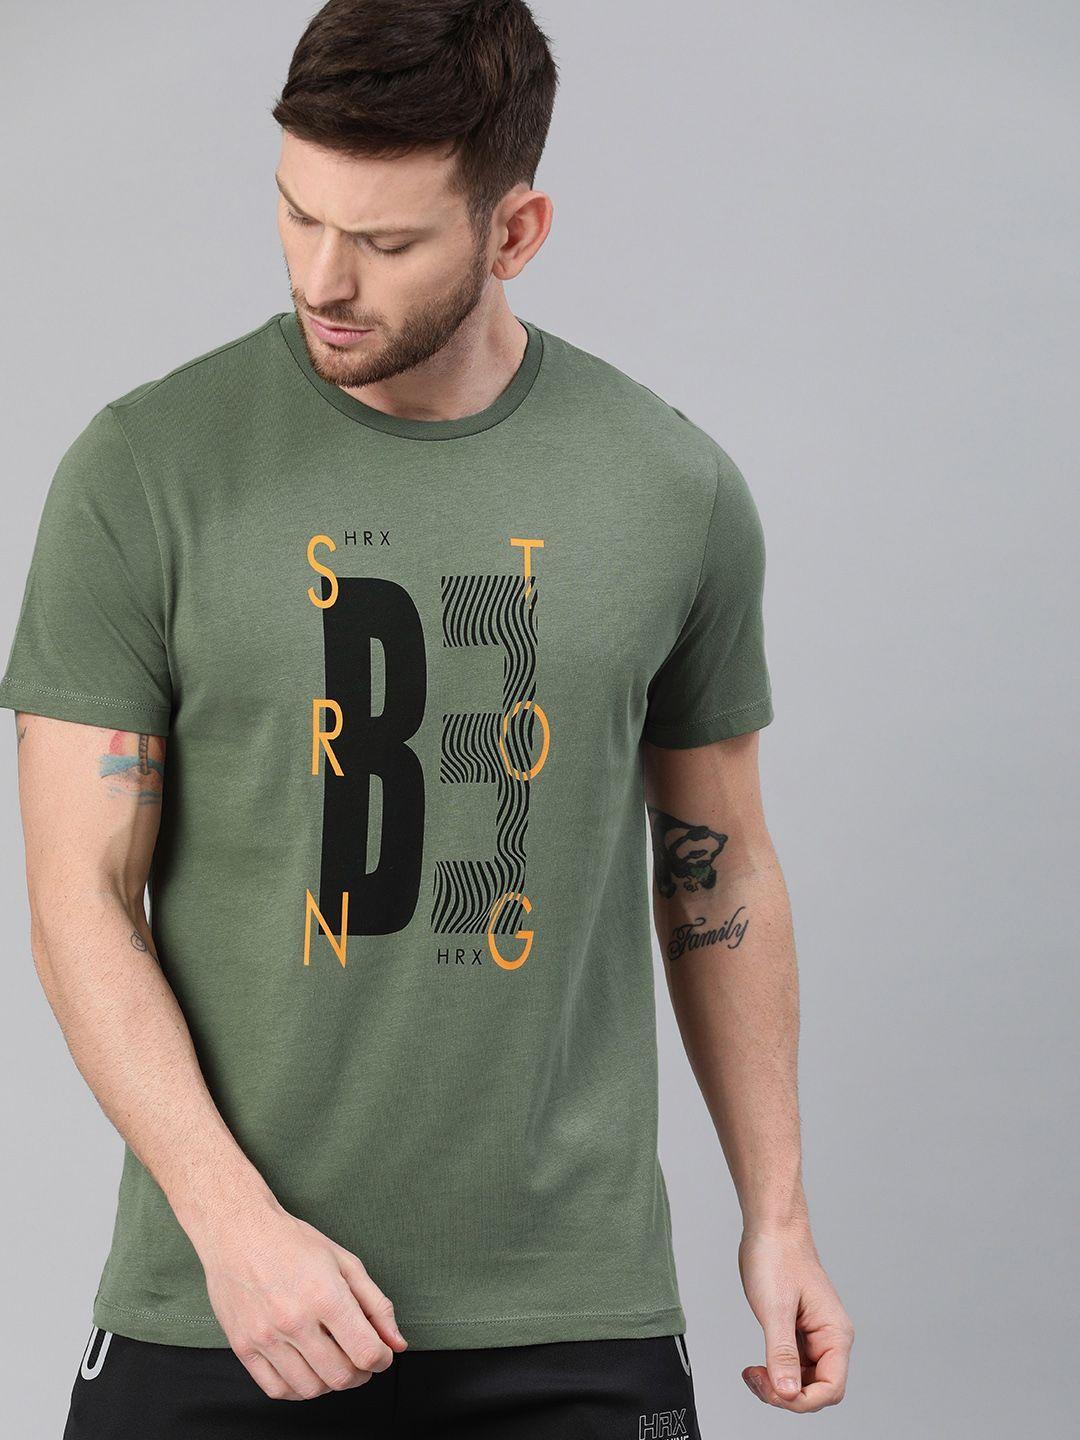 hrx-by-hrithik-roshan-men-olive-green-solid-bio-wash-running-tshirt